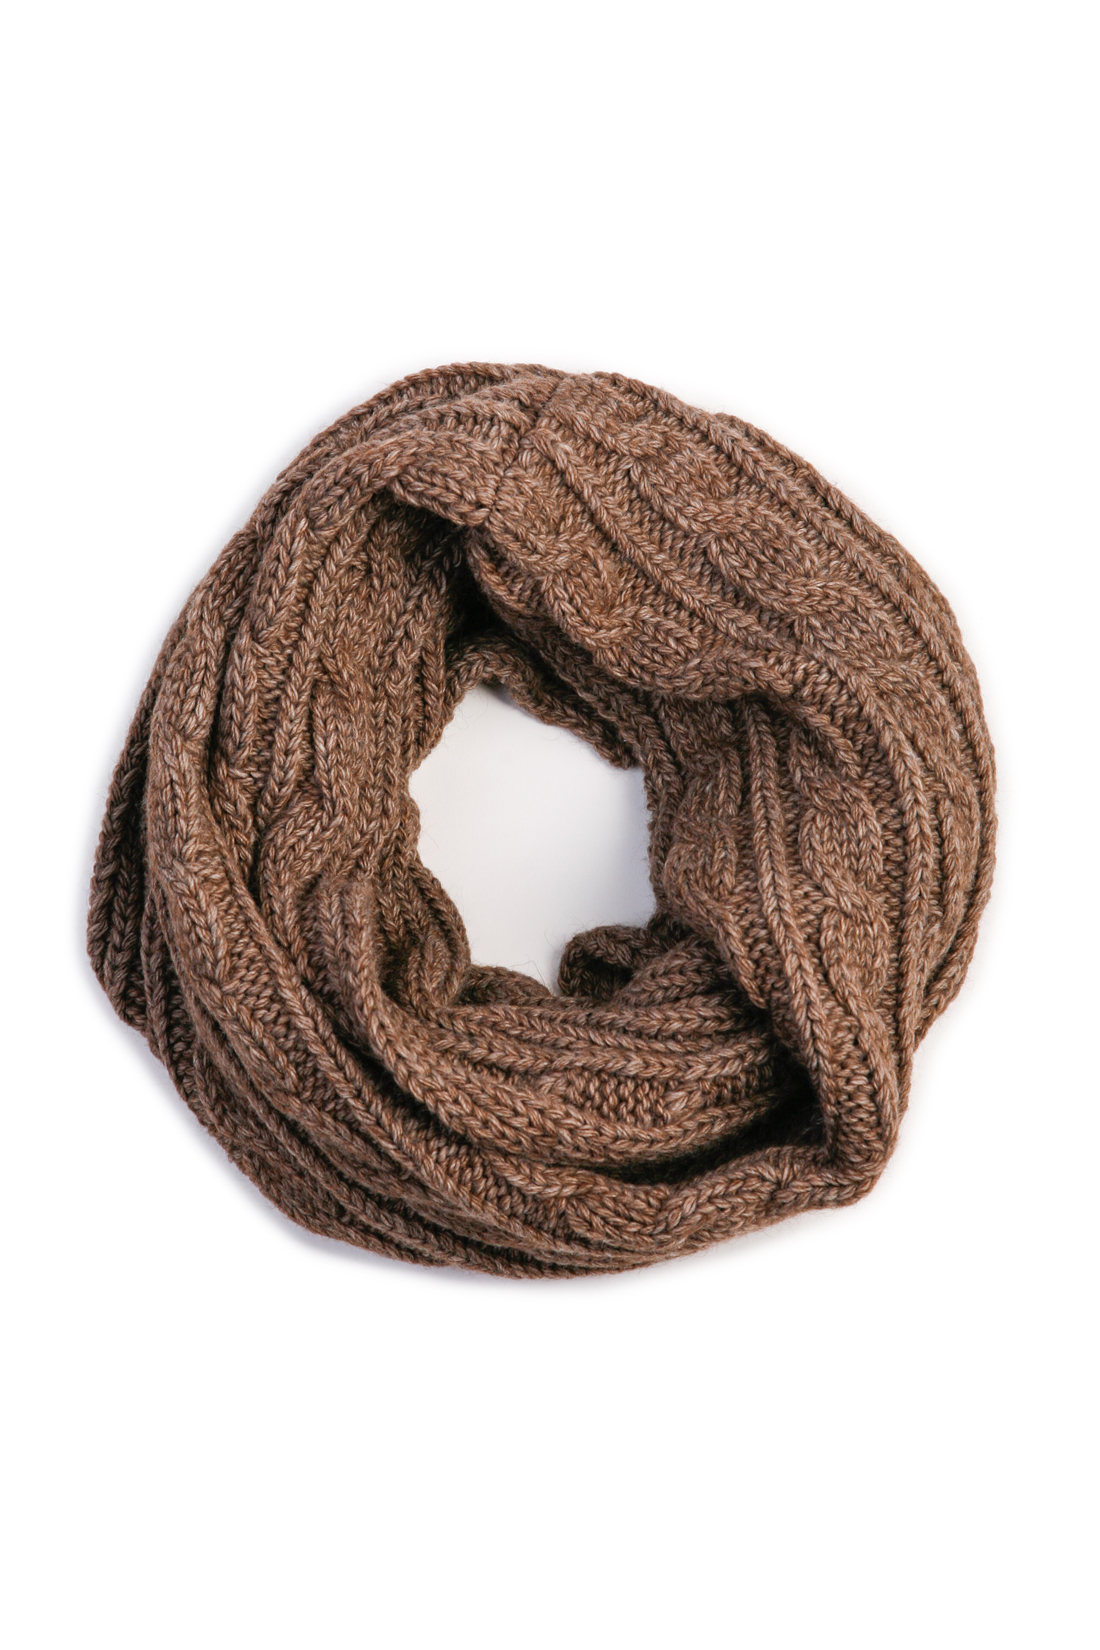 Коричневый шарф-снуд (арт. baon B358566), размер Без/раз, цвет flint#736460 Коричневый шарф-снуд (арт. baon B358566) - фото 1